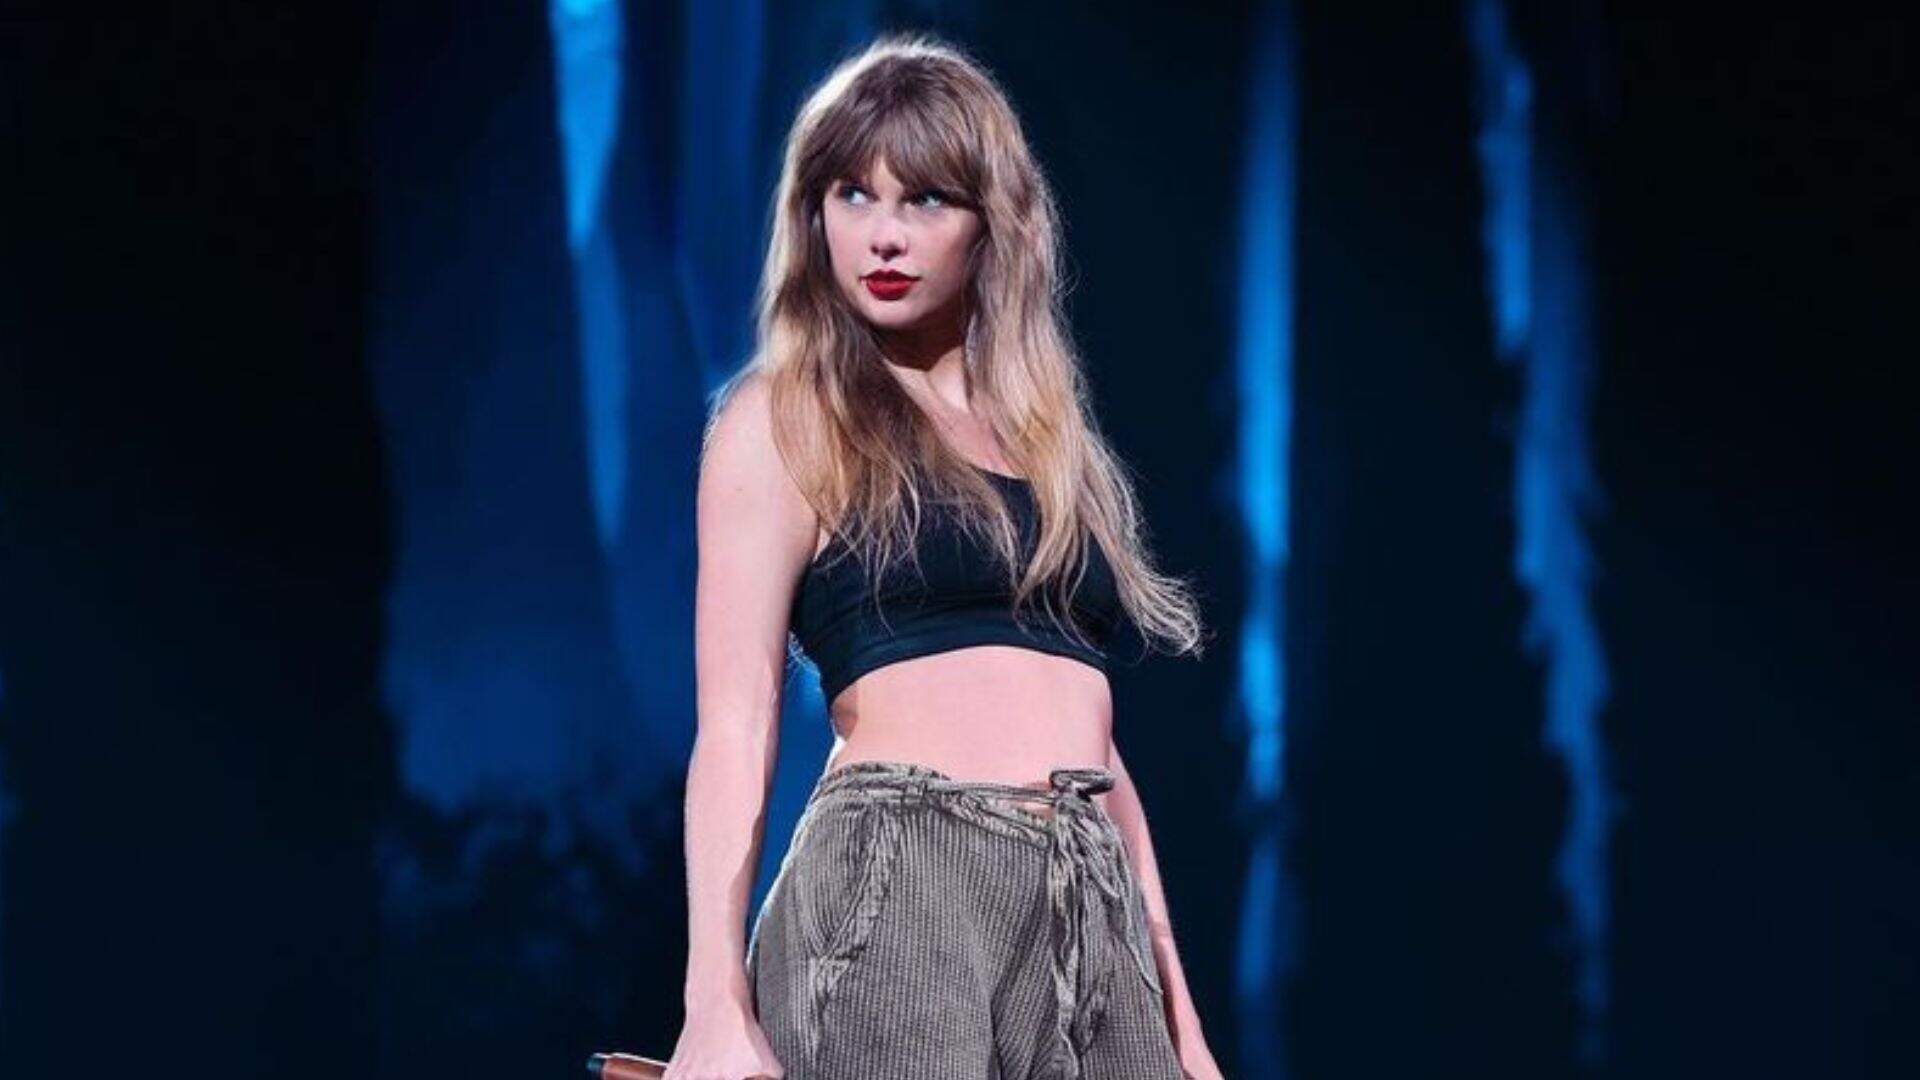 Vai ter que pagar! Taylor Swift recebe multa exorbitante após descartar lixo incorretamente em sua casa nos Estados Unidos - Metropolitana FM